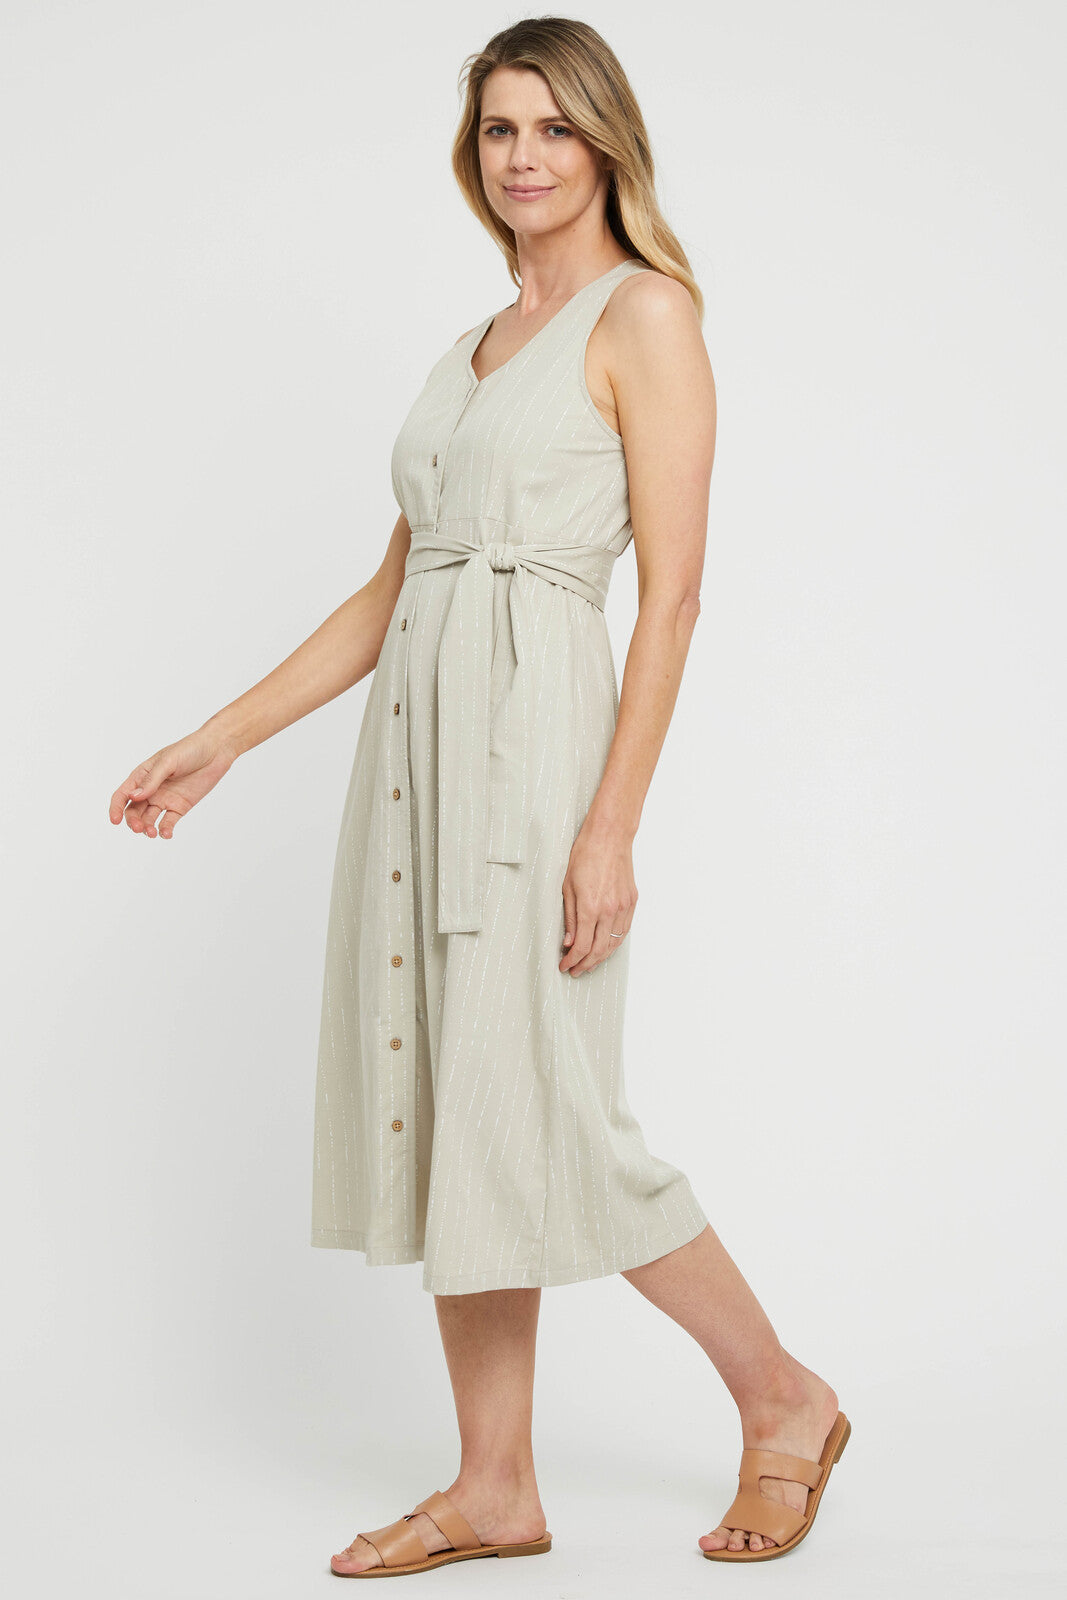 Organic Bamboo Button Front Nursing Dress Dress from Bamboo Body maternity online store brisbane sydney perth australia